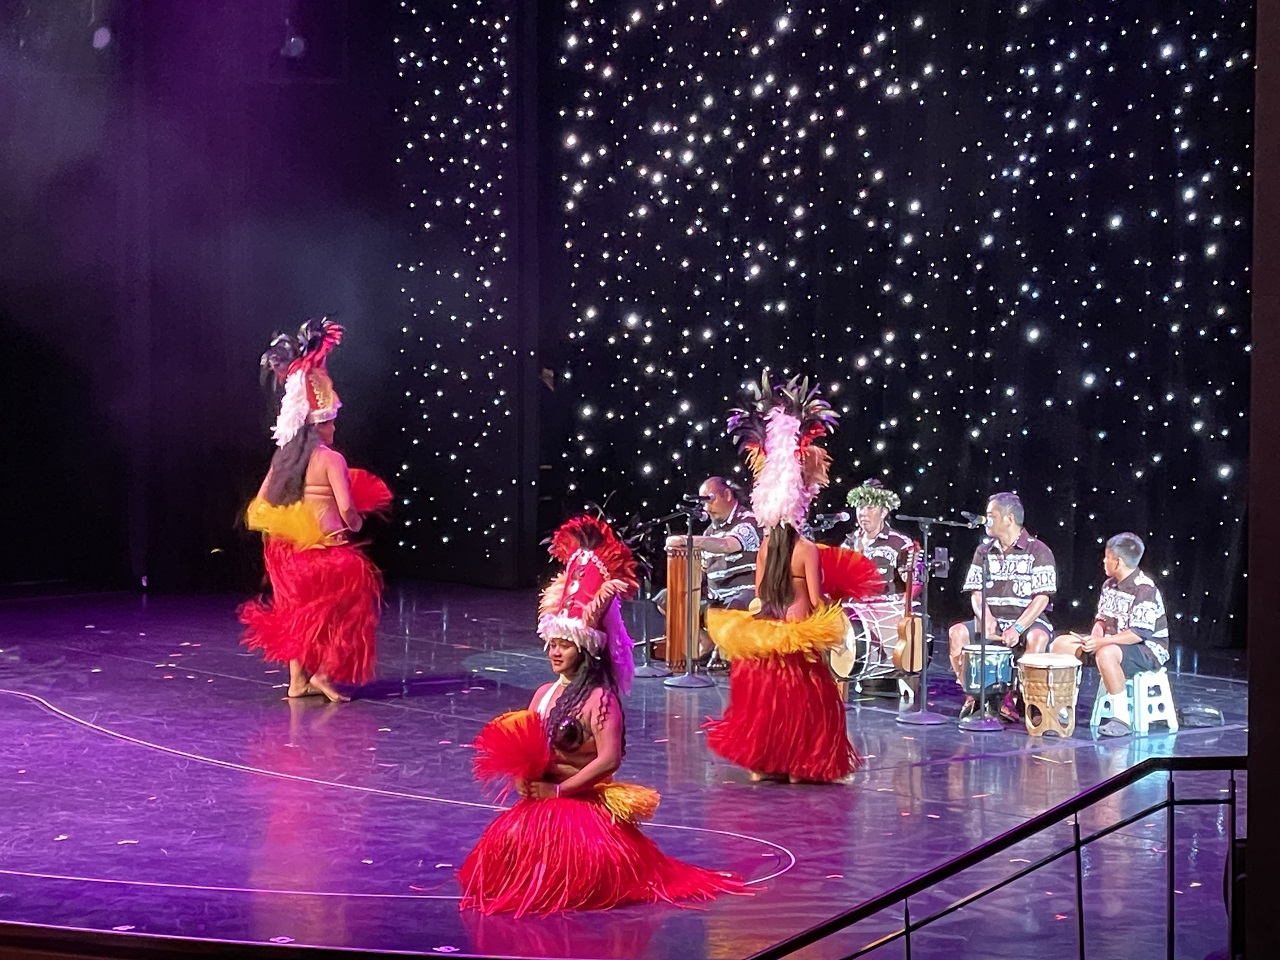 Maui Hula Dancers performing on Ovation of the Seas